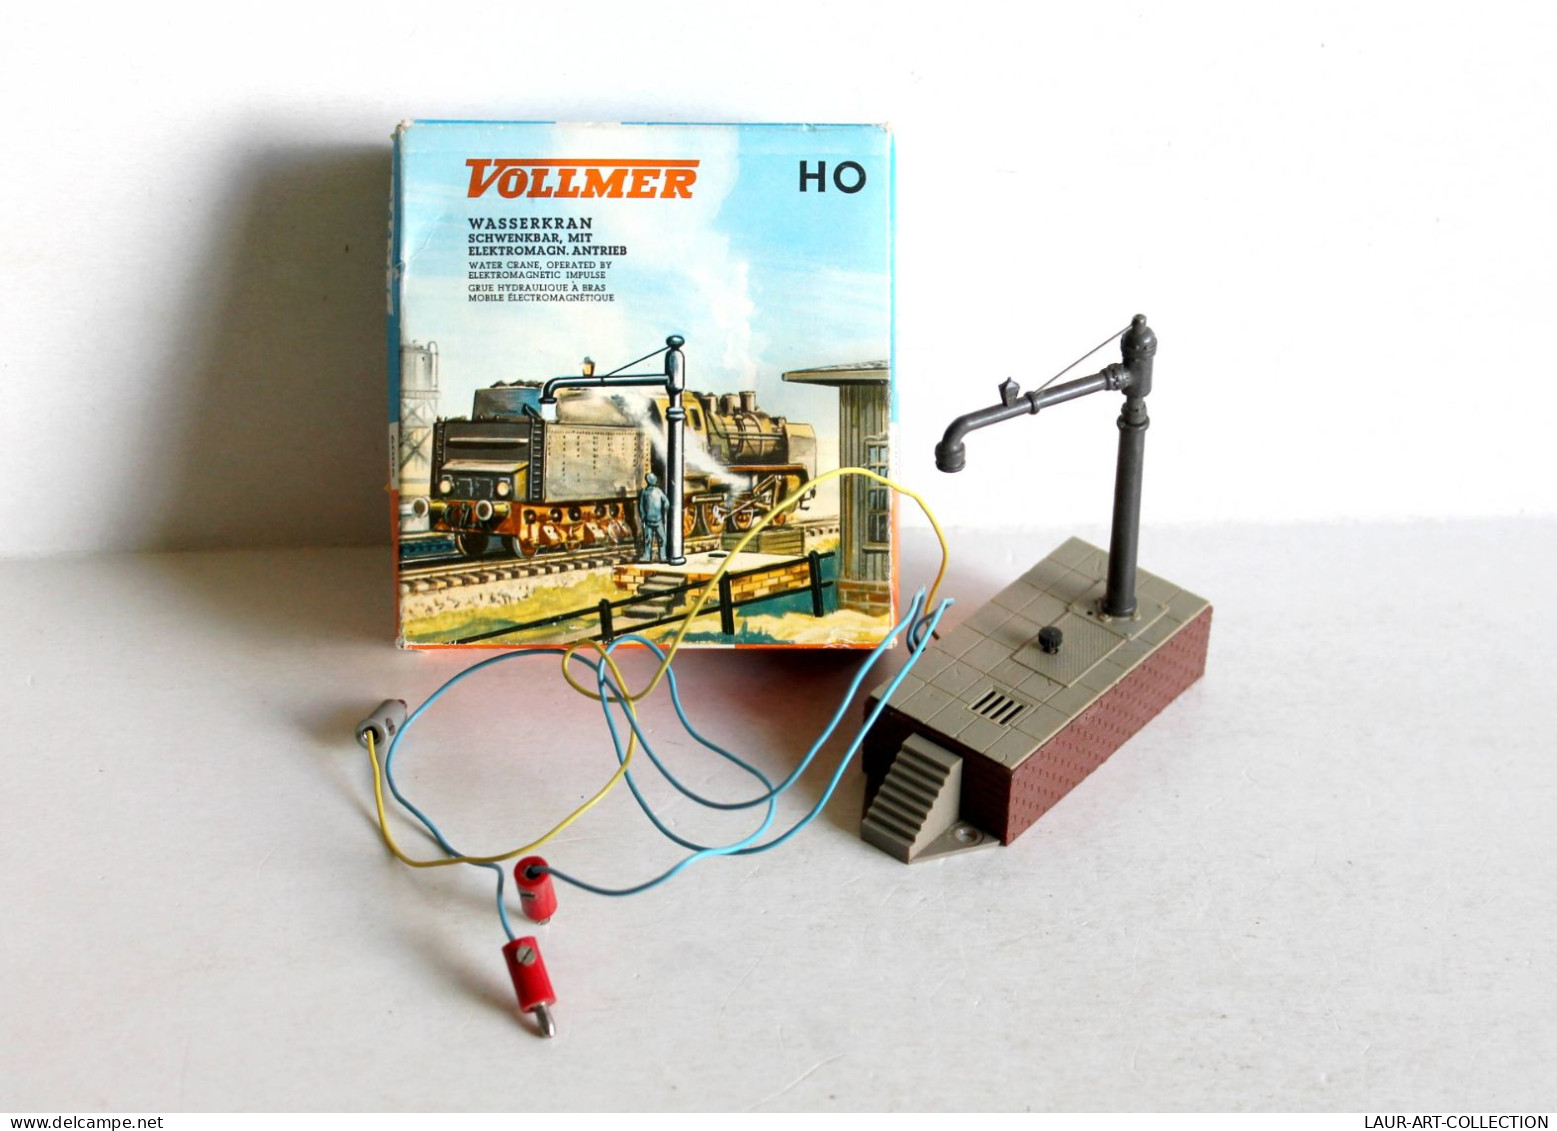 VOLLMER HO N°6006 GRUE HYDRAULIQUE A BRAS MOBILE ELECTROMAGNETIQUE / WATER CRANE / ANCIEN MODEL REDUIT (1712.254) - Elektr. Zubehör